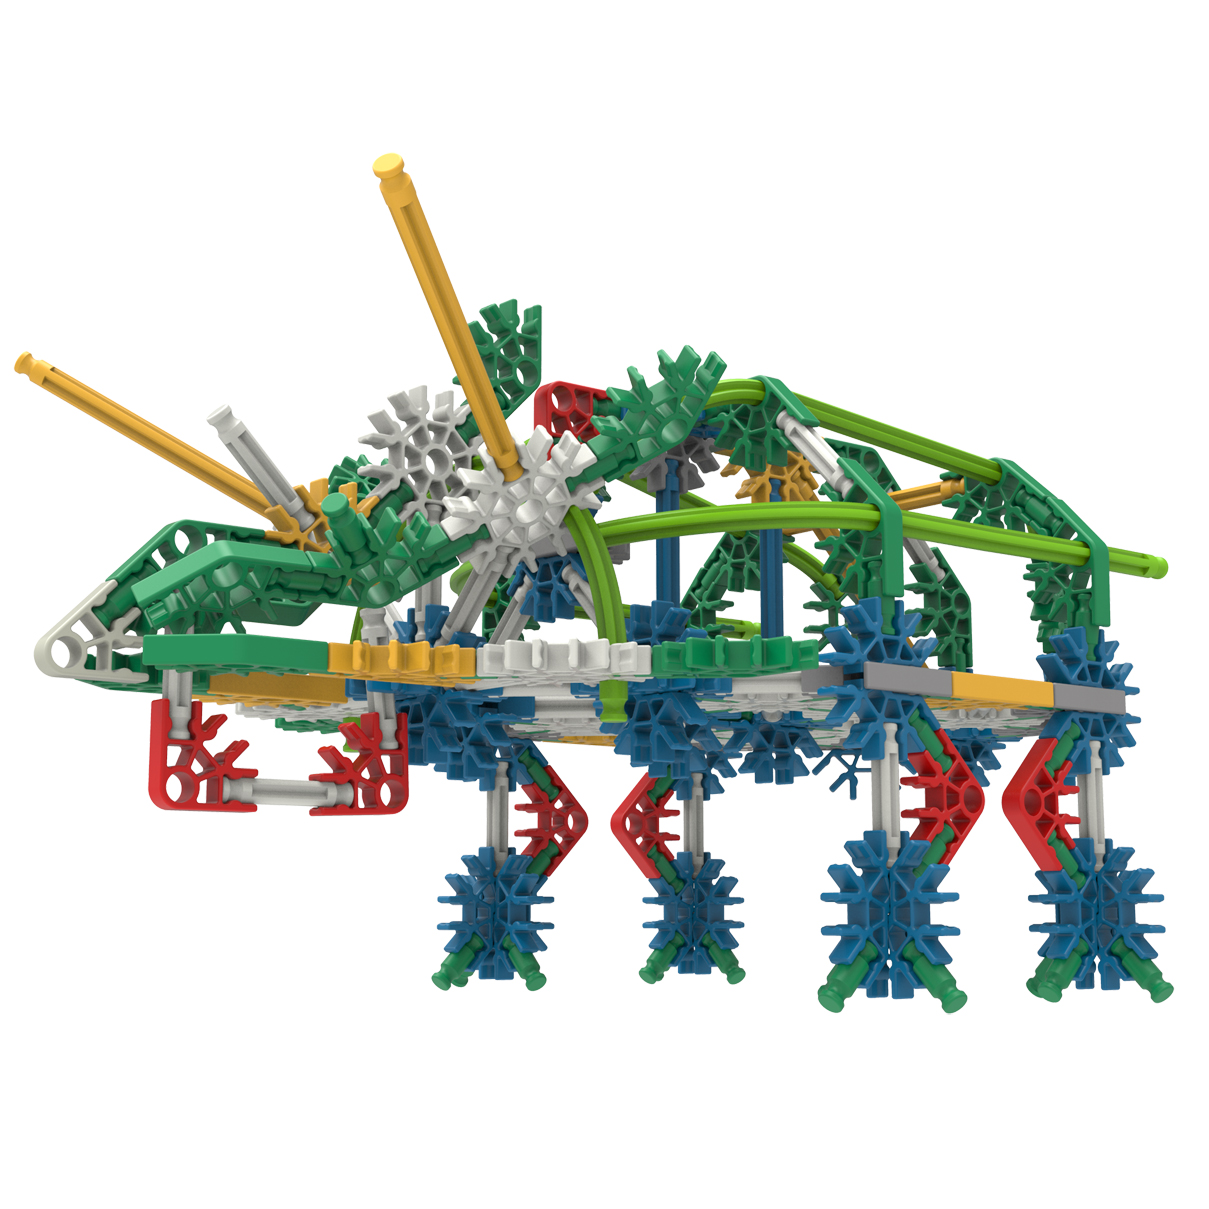 K'NEX - 100 Model Imagine Building Set - Construction Education Toy |  BasicFun!